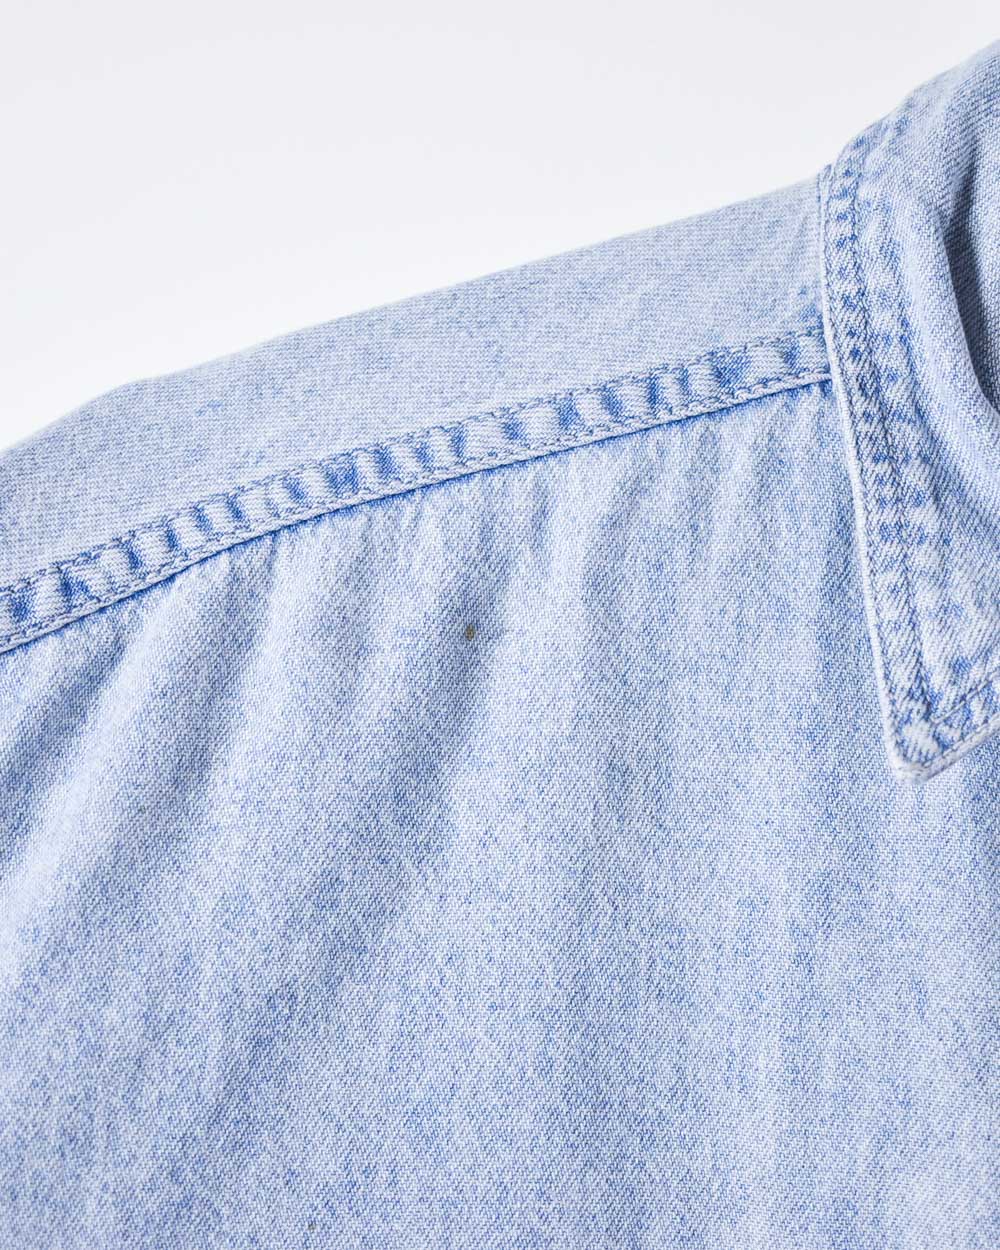 BabyBlue Levi's Denim Shirt - X-Large Women's